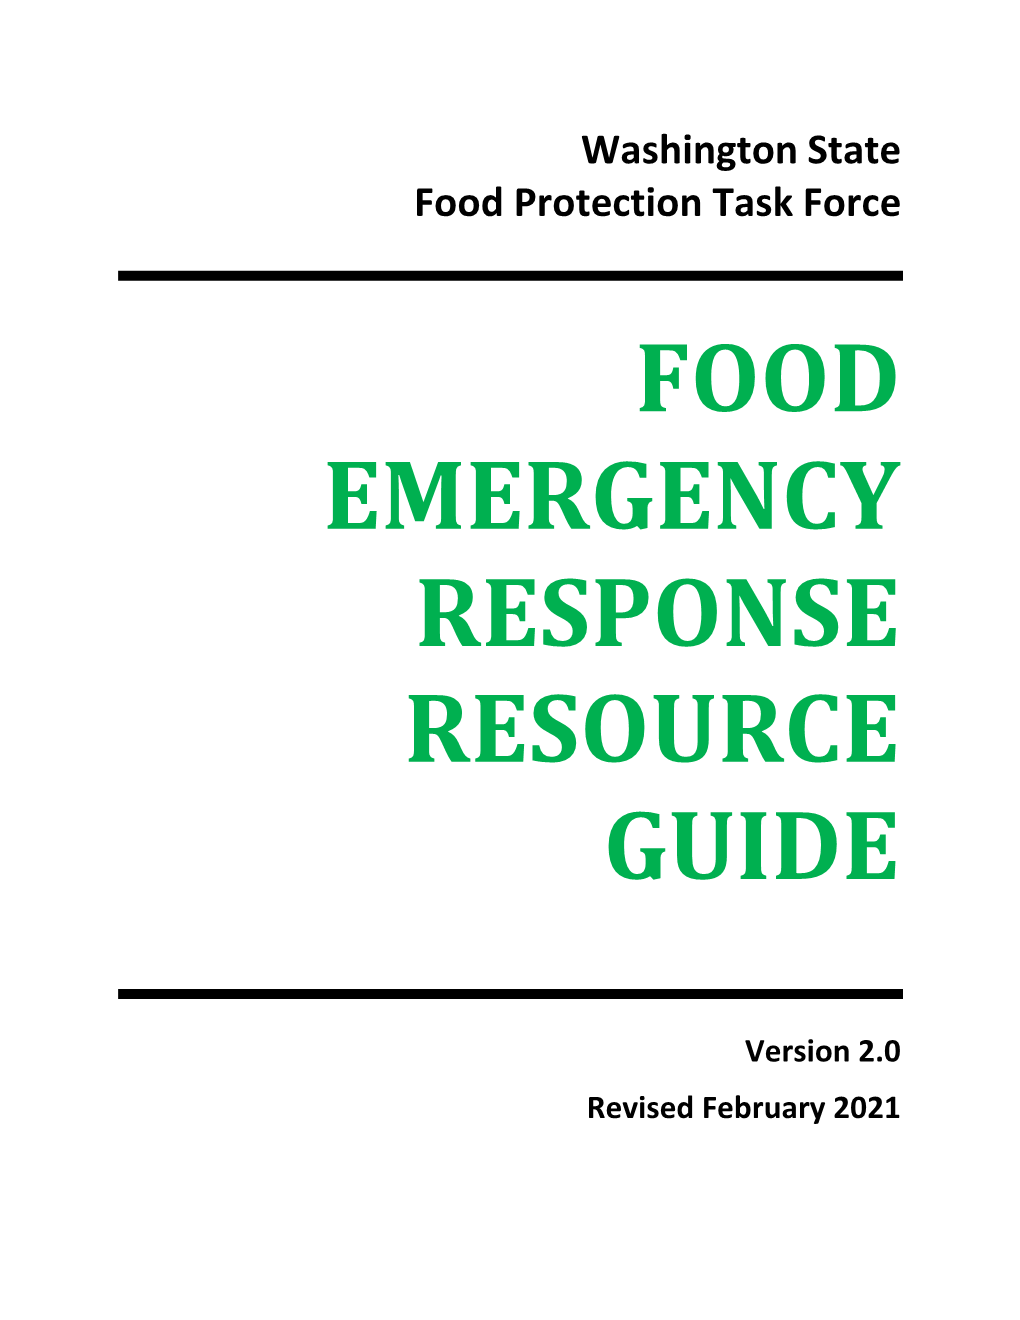 Food Emergency Response Resource Guide